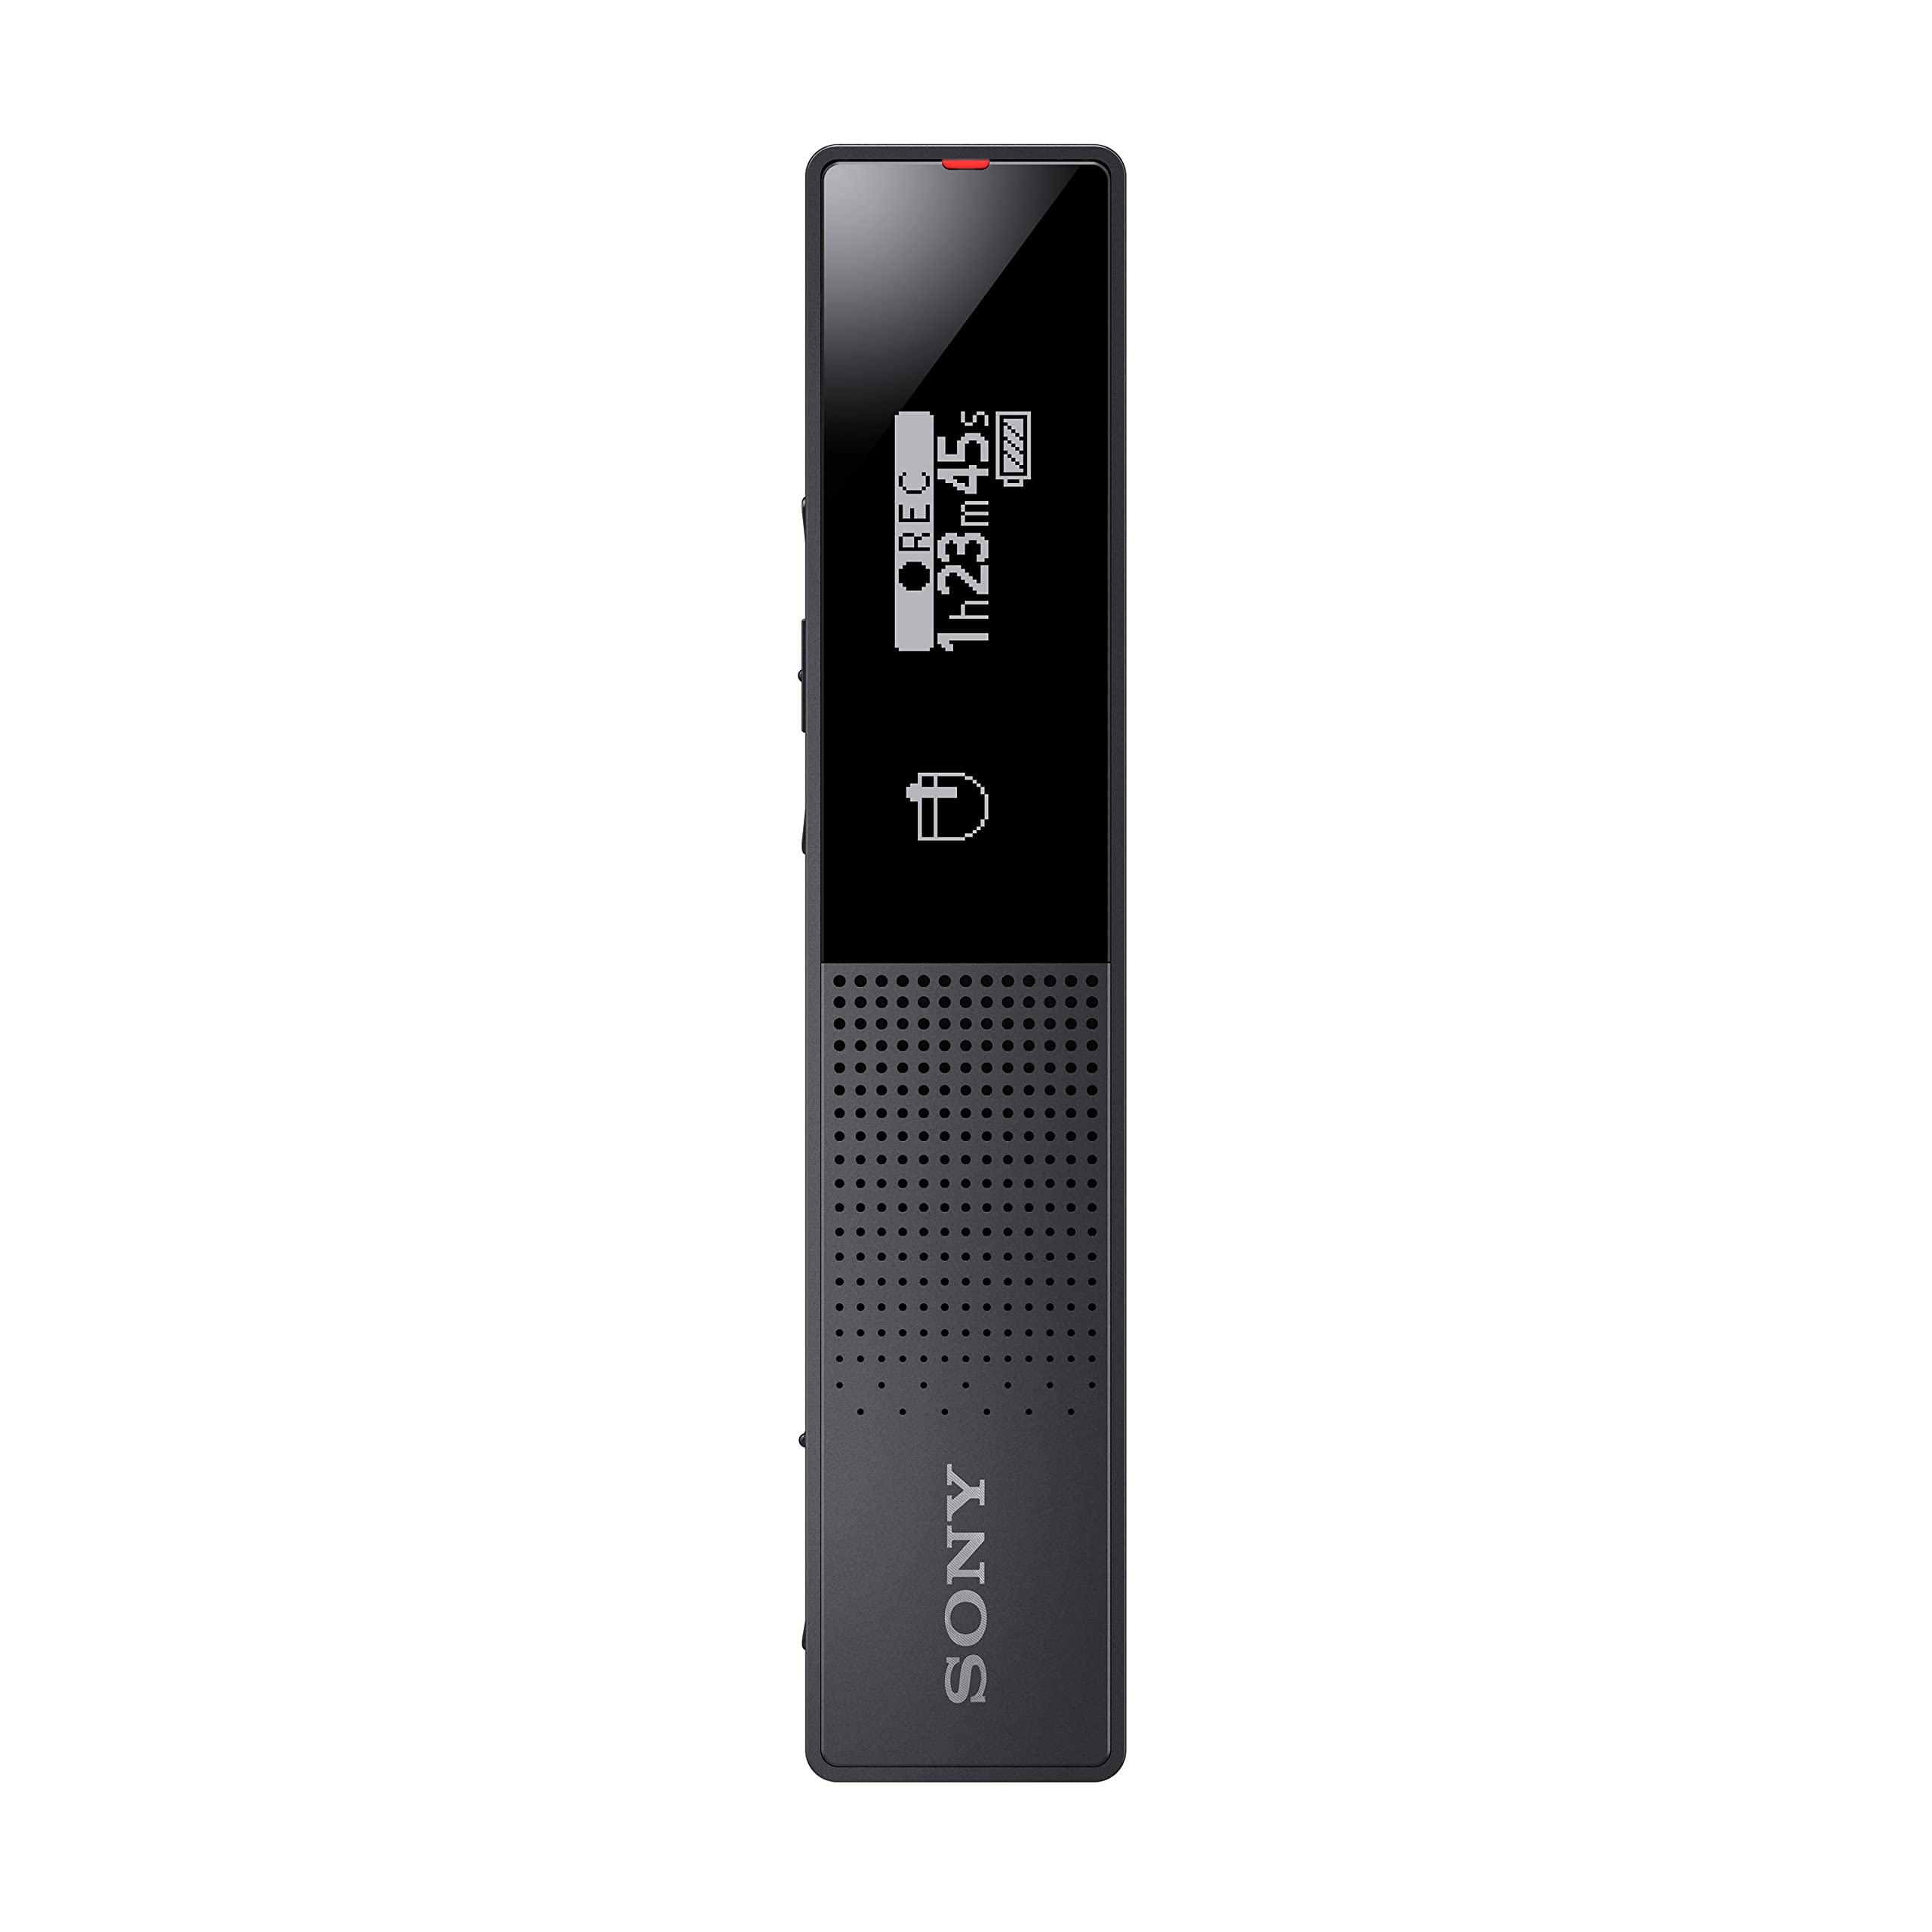 Sony ICD-TX660 - Gravador de voz digital fino com displ...